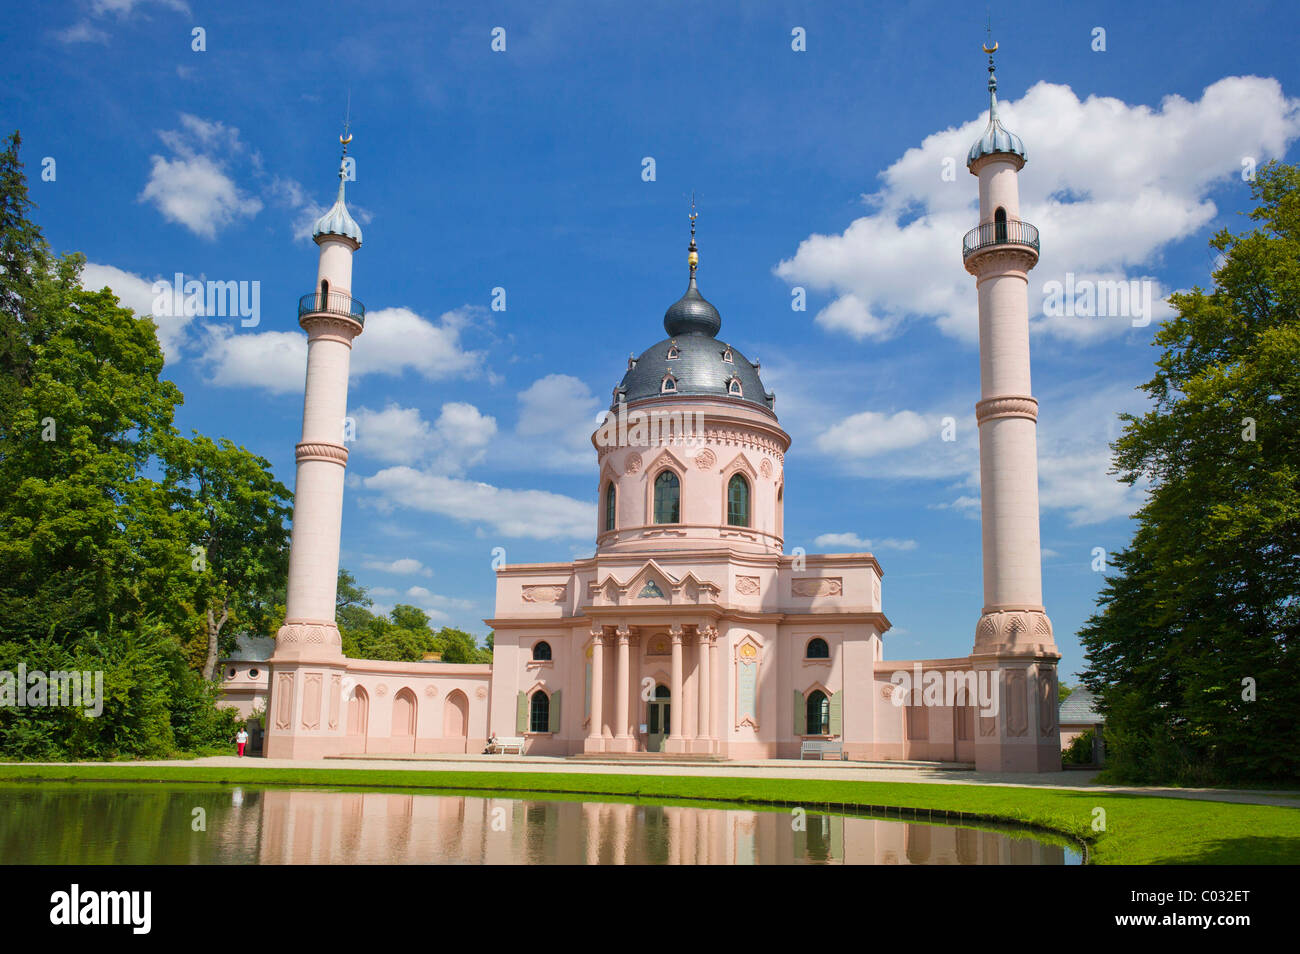 Moschee, Schloss Schwetzingen oder Schwetzingen Schloss Palast Gärten, Schwetzingen, Baden-Württemberg, Deutschland, Europa Stockfoto